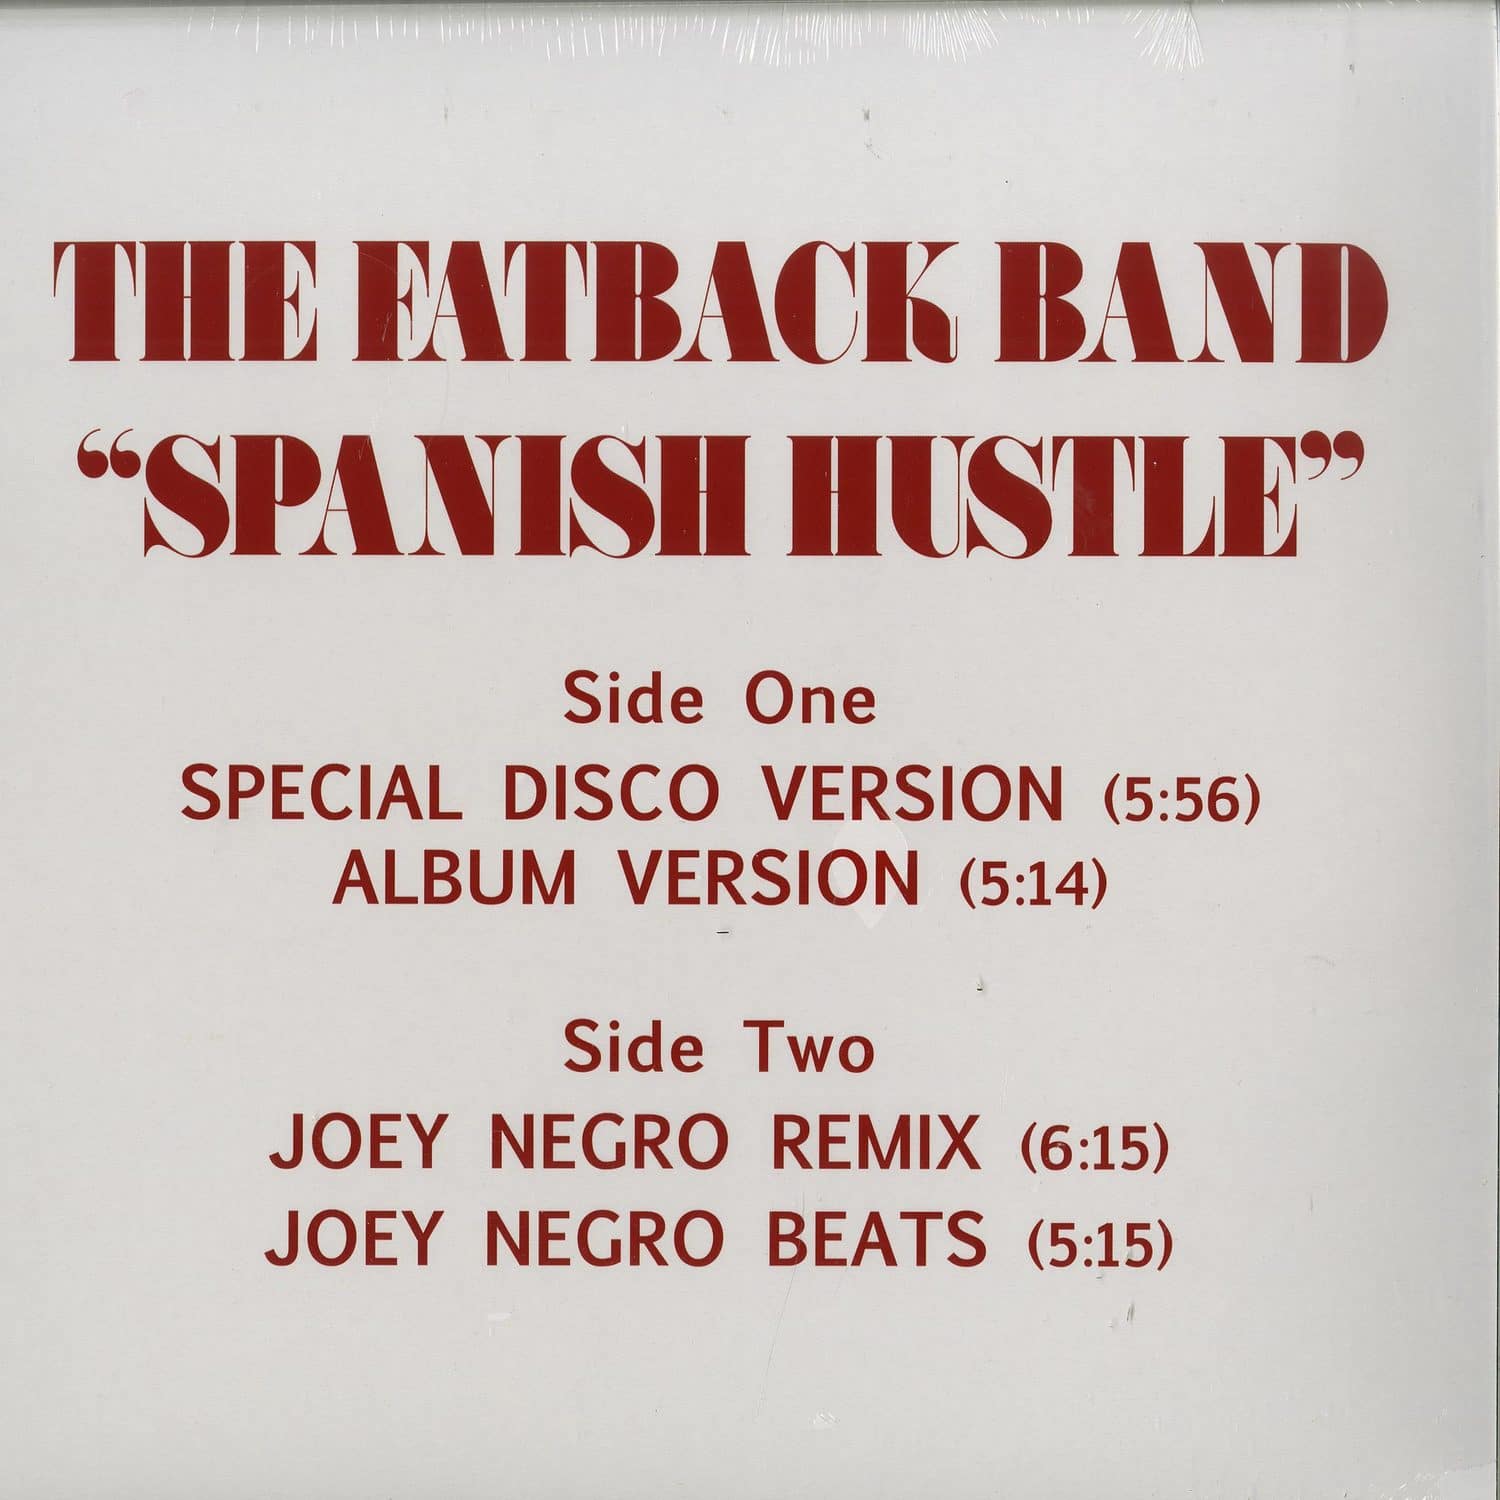 The Fatback Band - SPANISH HUSTLE